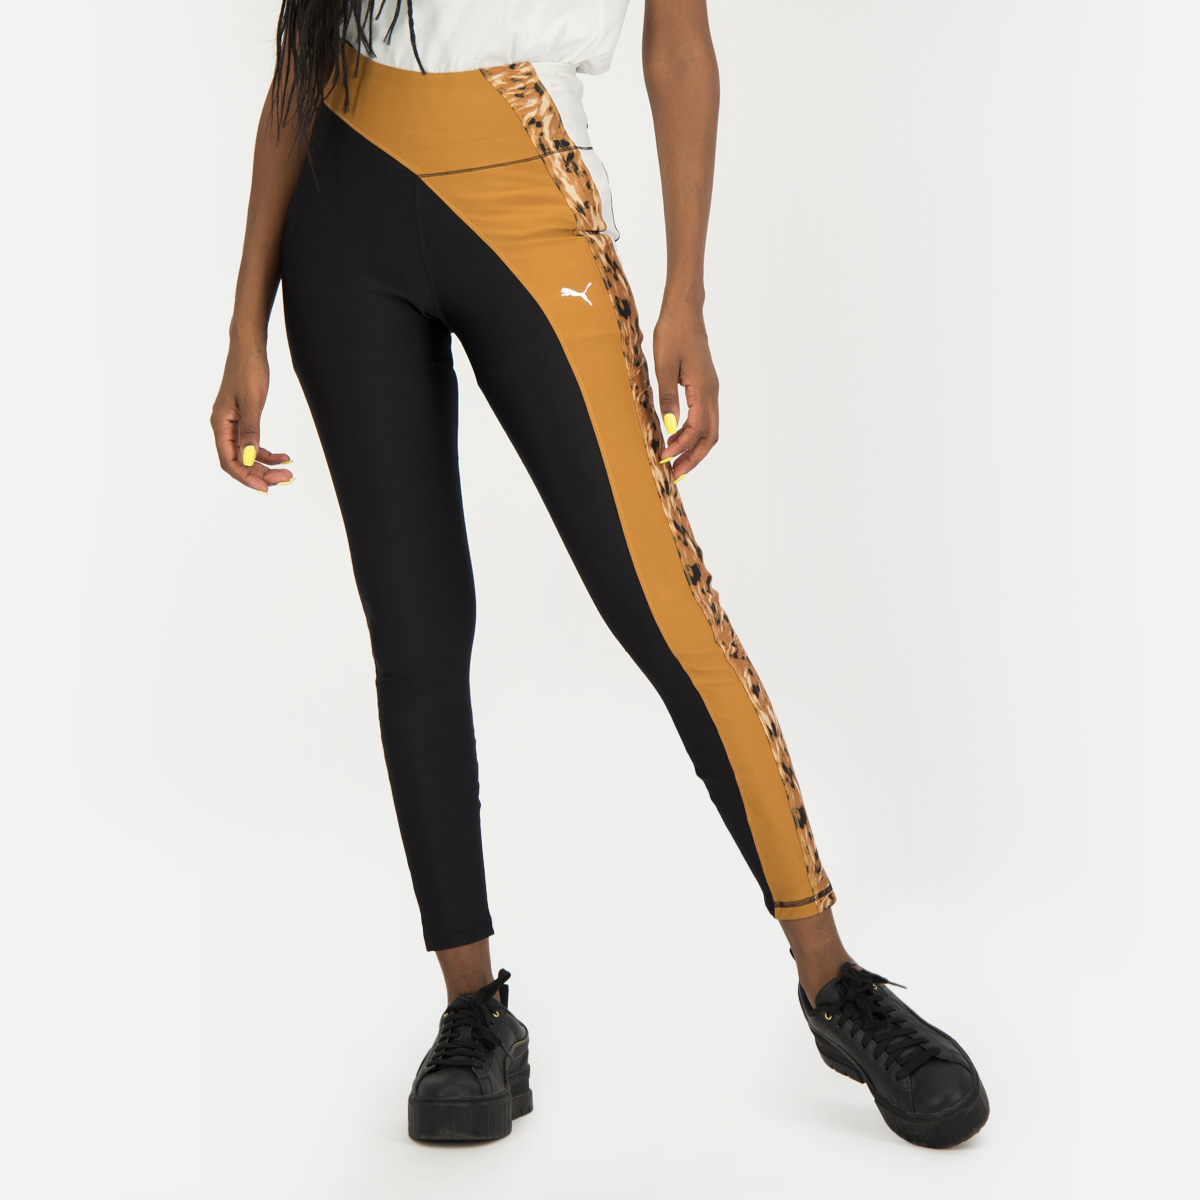 Puma safari glam 7/8 black leggings size XL